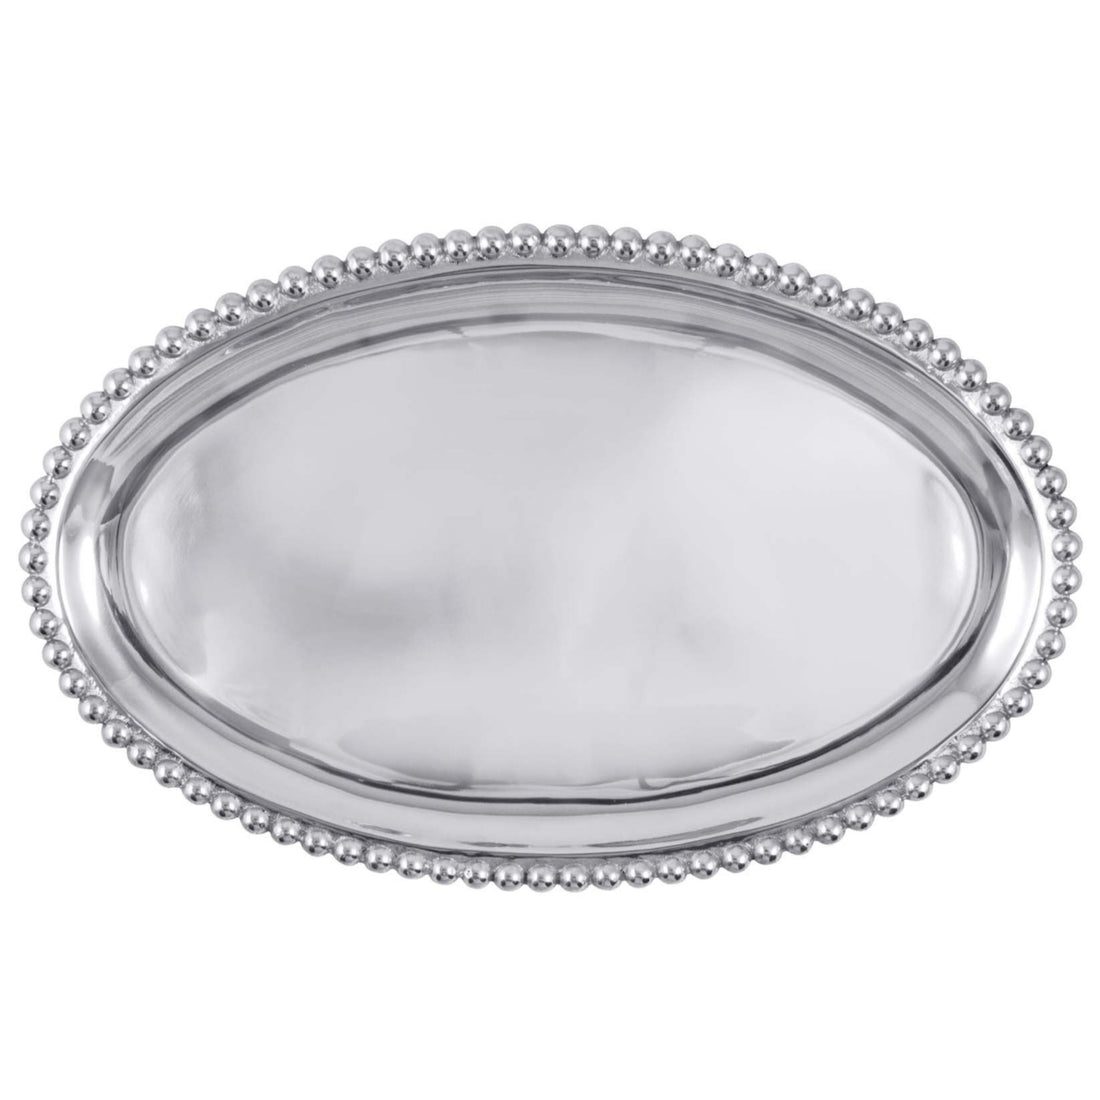 Pearled Large Oval Platter | Mariposa Platters